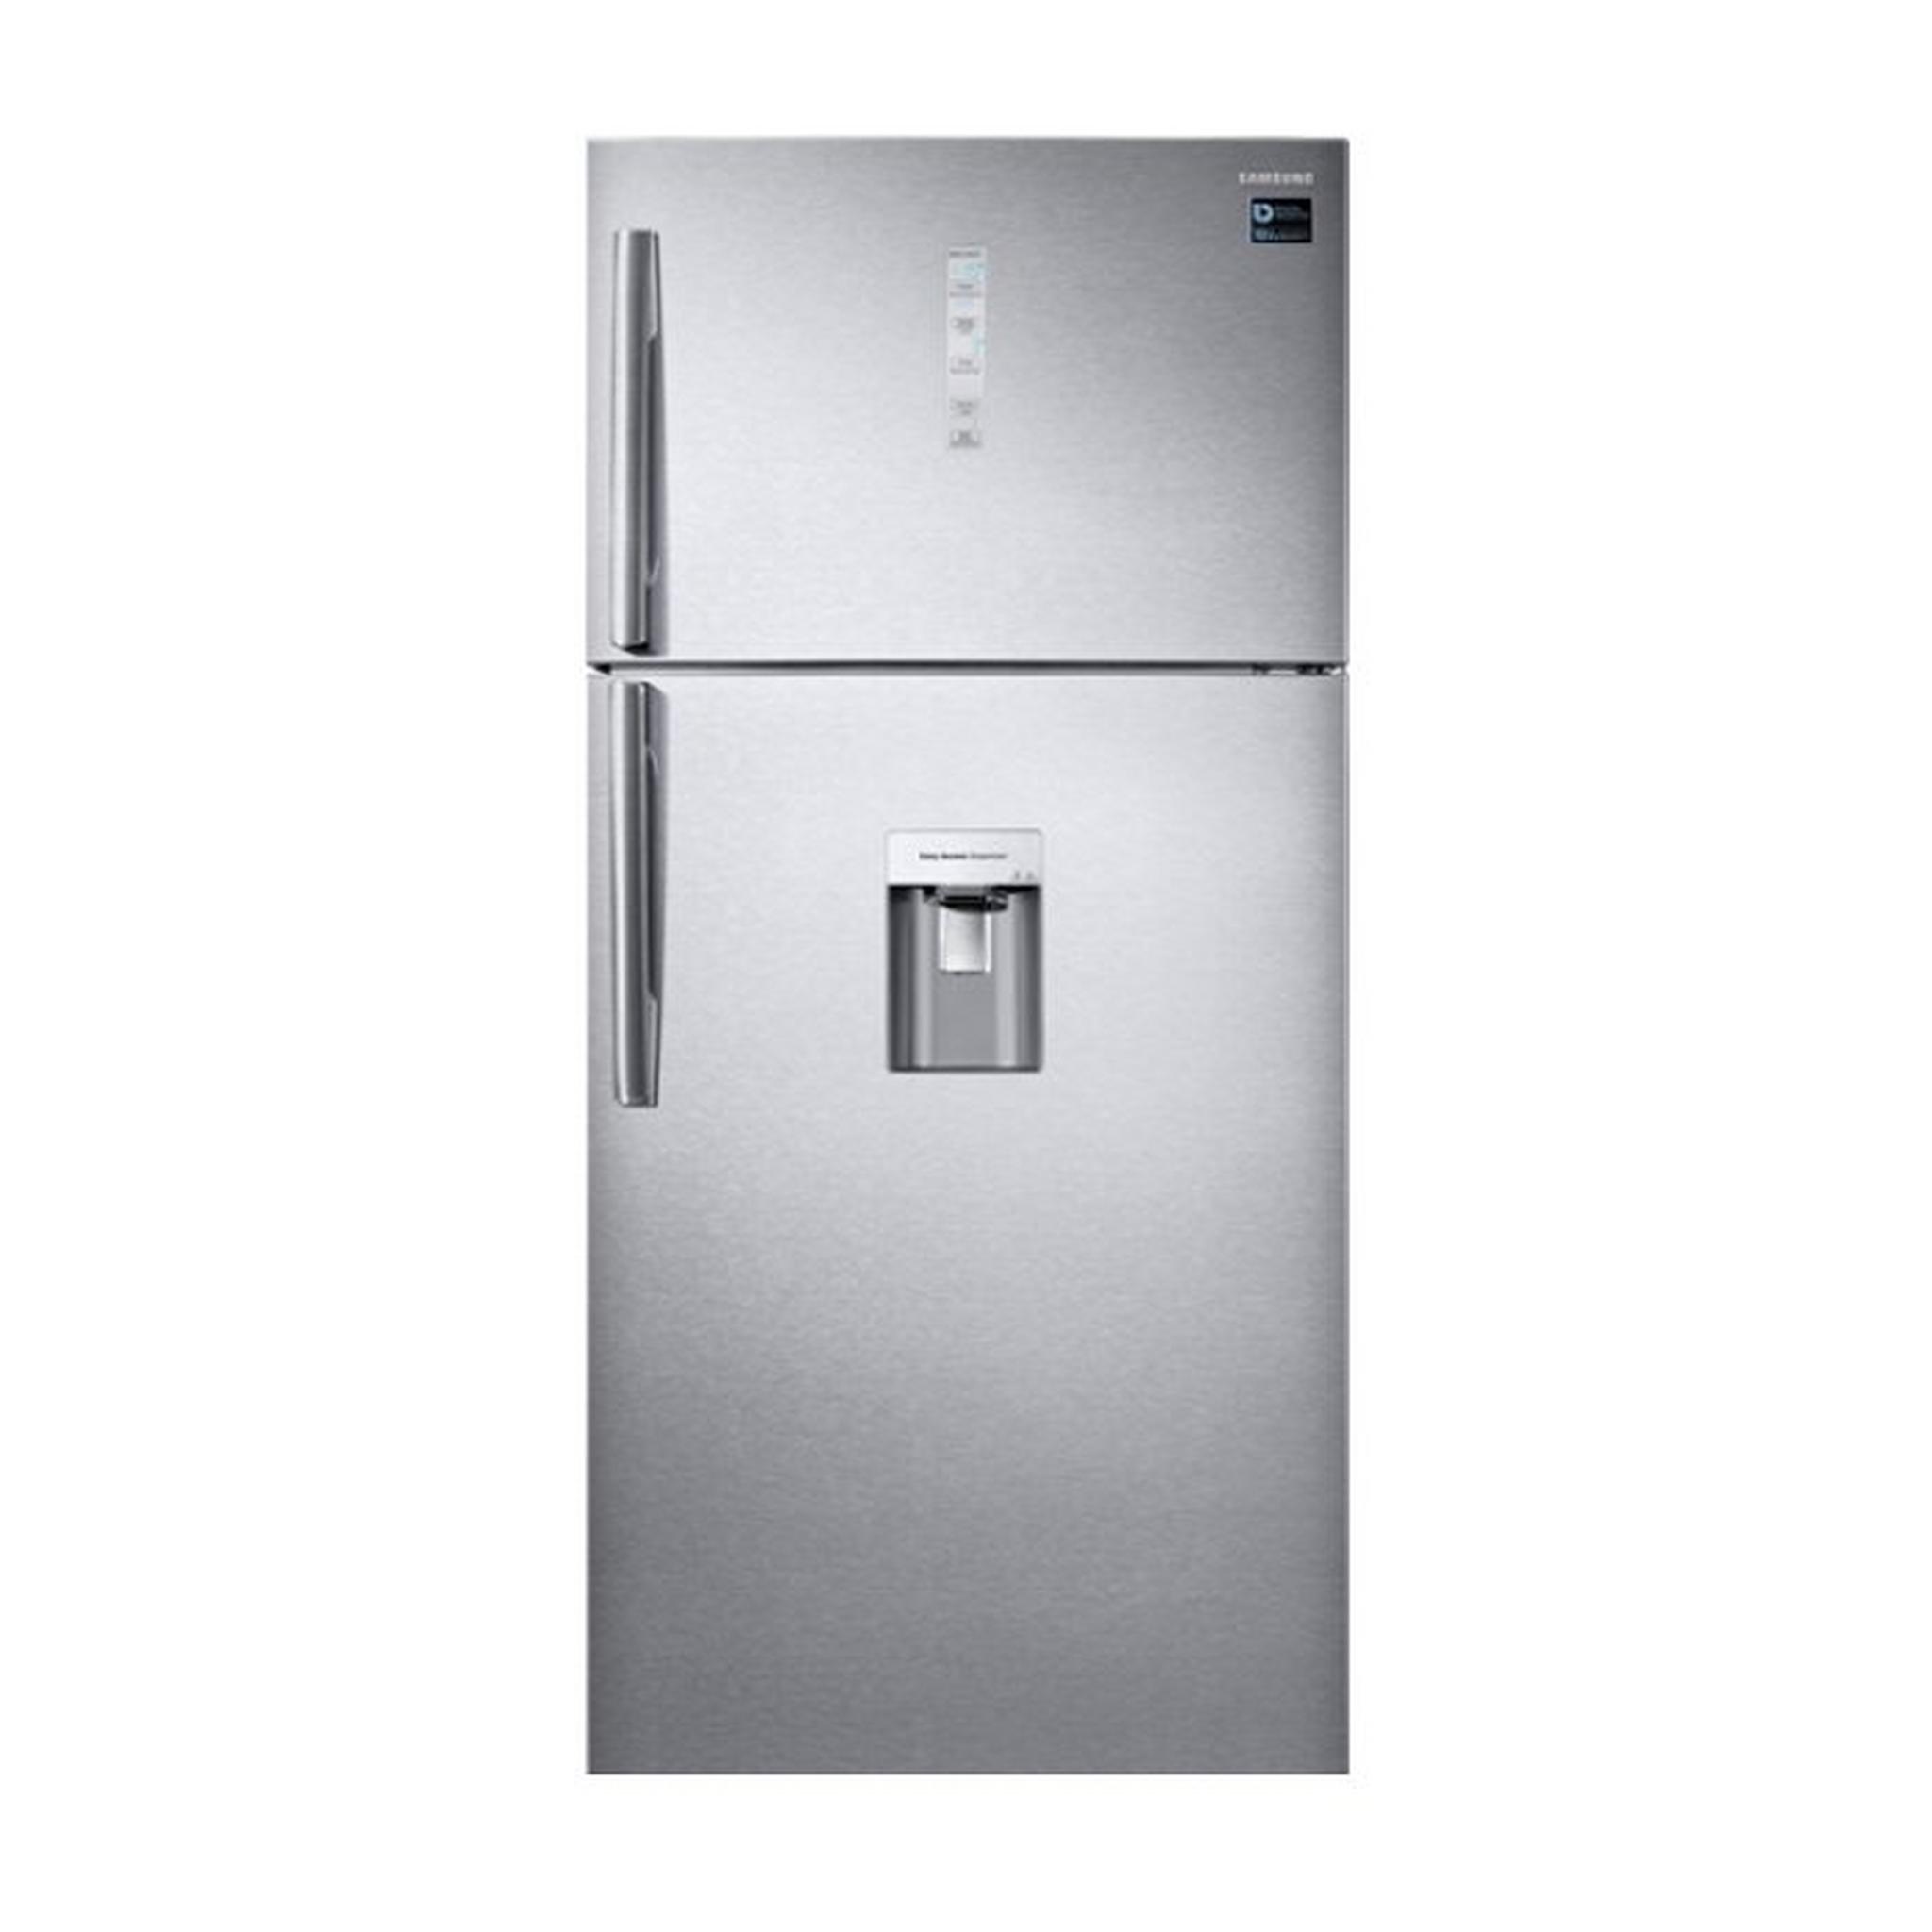 Samsung Top Mount Refrigerator, 30CFT, 850-Liters, RT85K7150SL - Silver